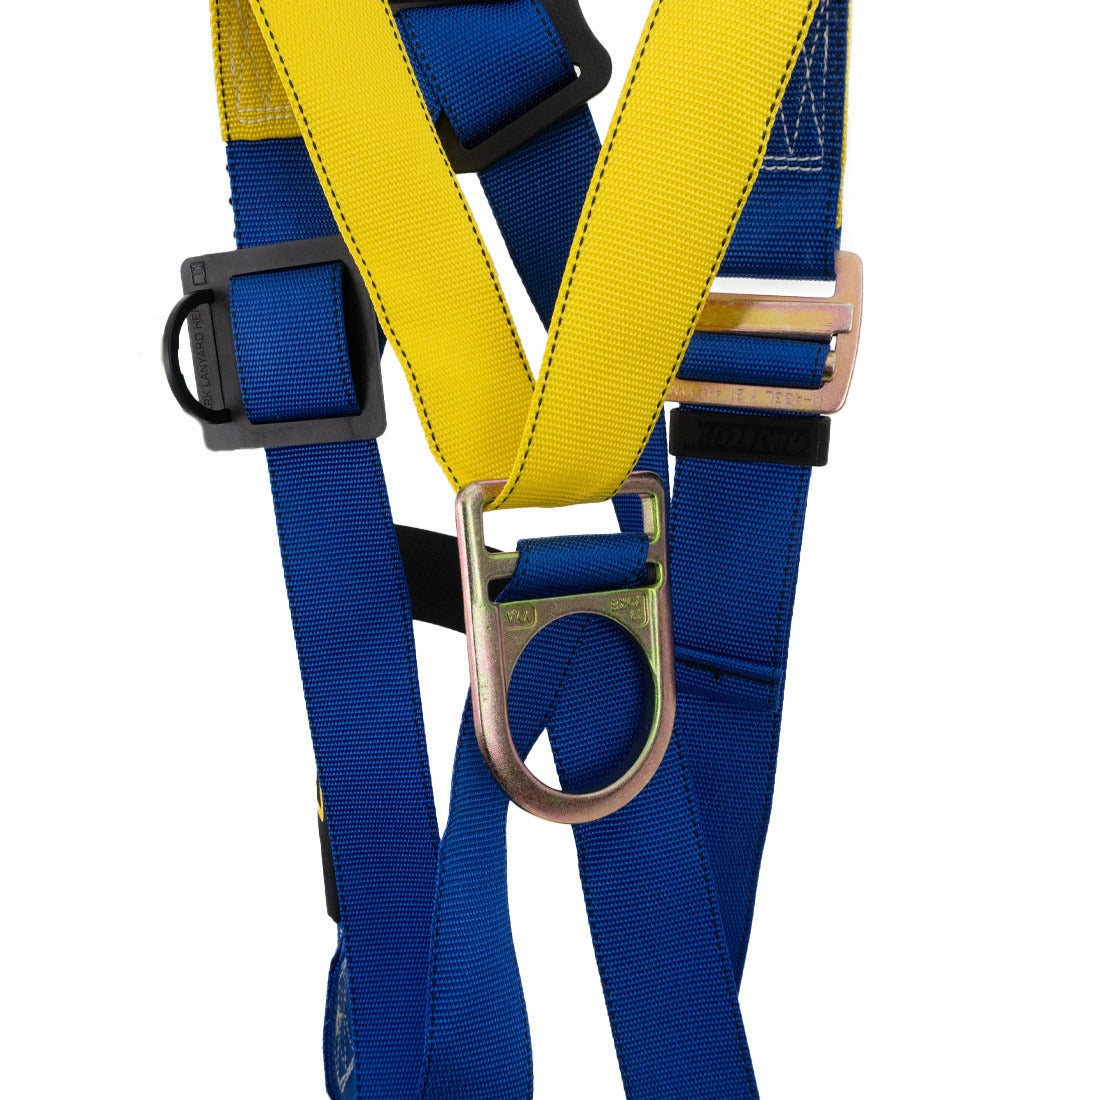 Gemtor Full Body Vest Universal Harness 933-2 - Pass-Thru Buckle Back View